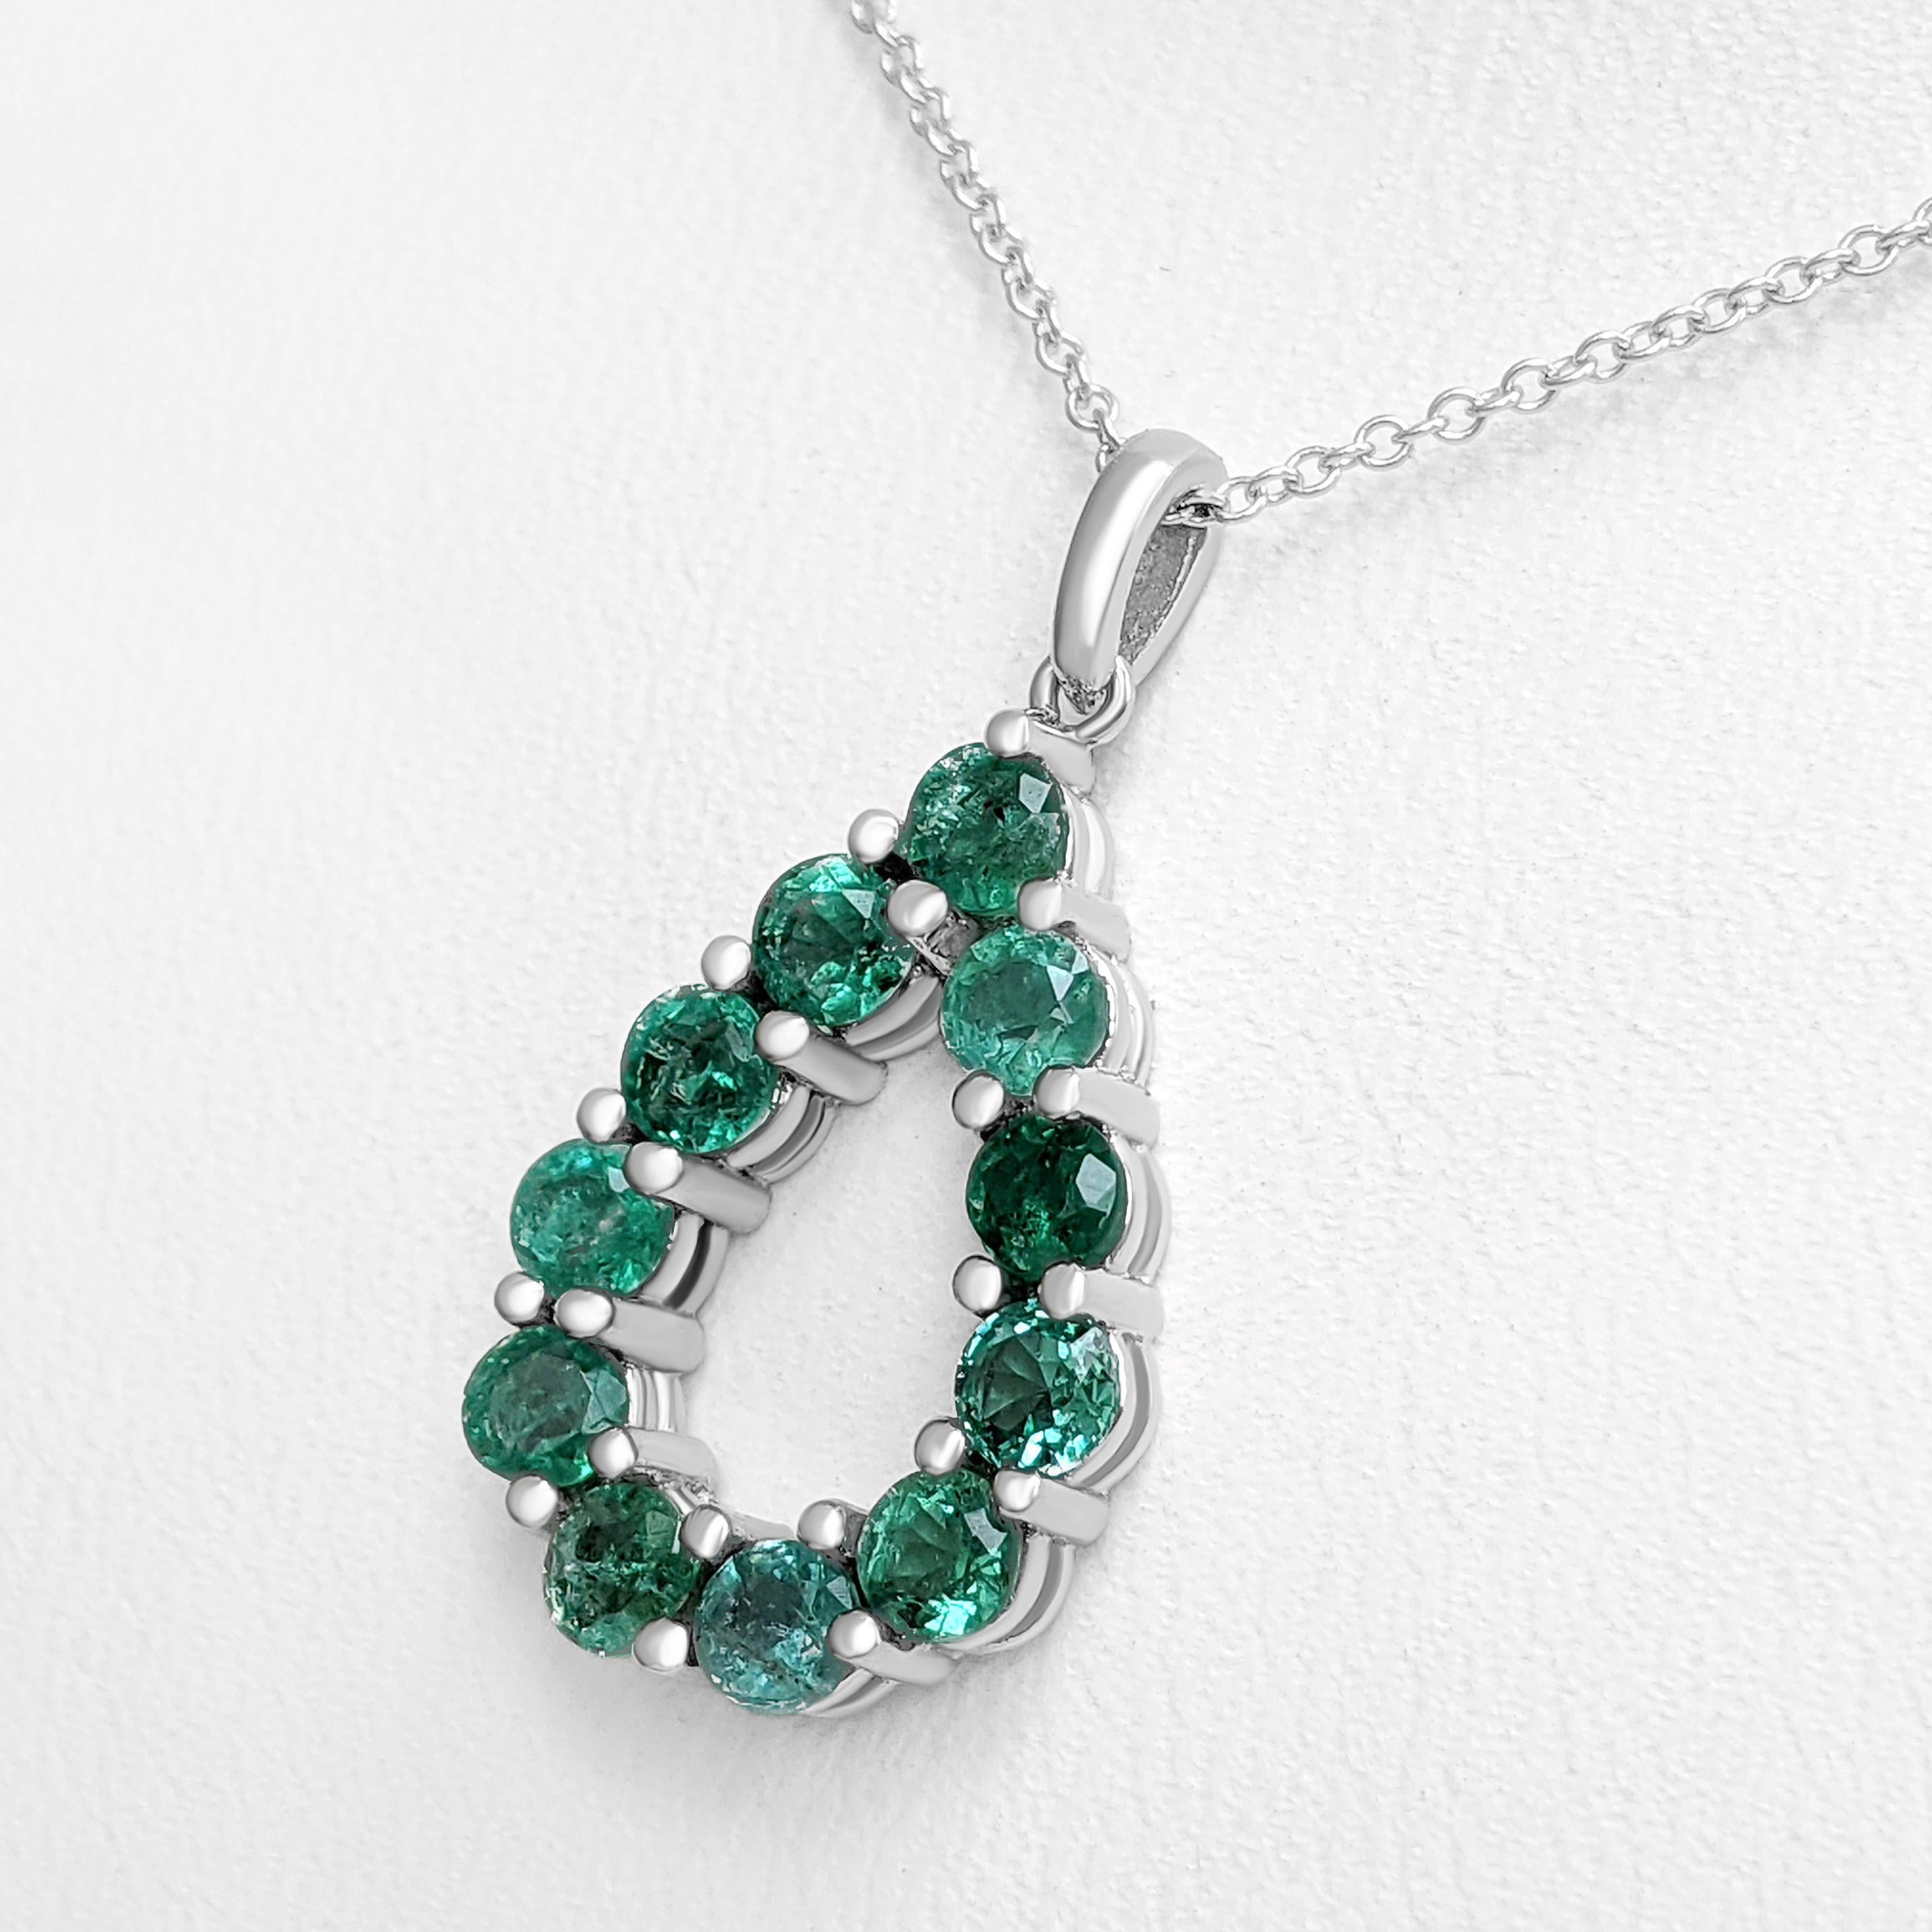 Women's NO RESERVE! 1.61 Carat Emerald, 14 Karat White Gold, Necklace with Pendant